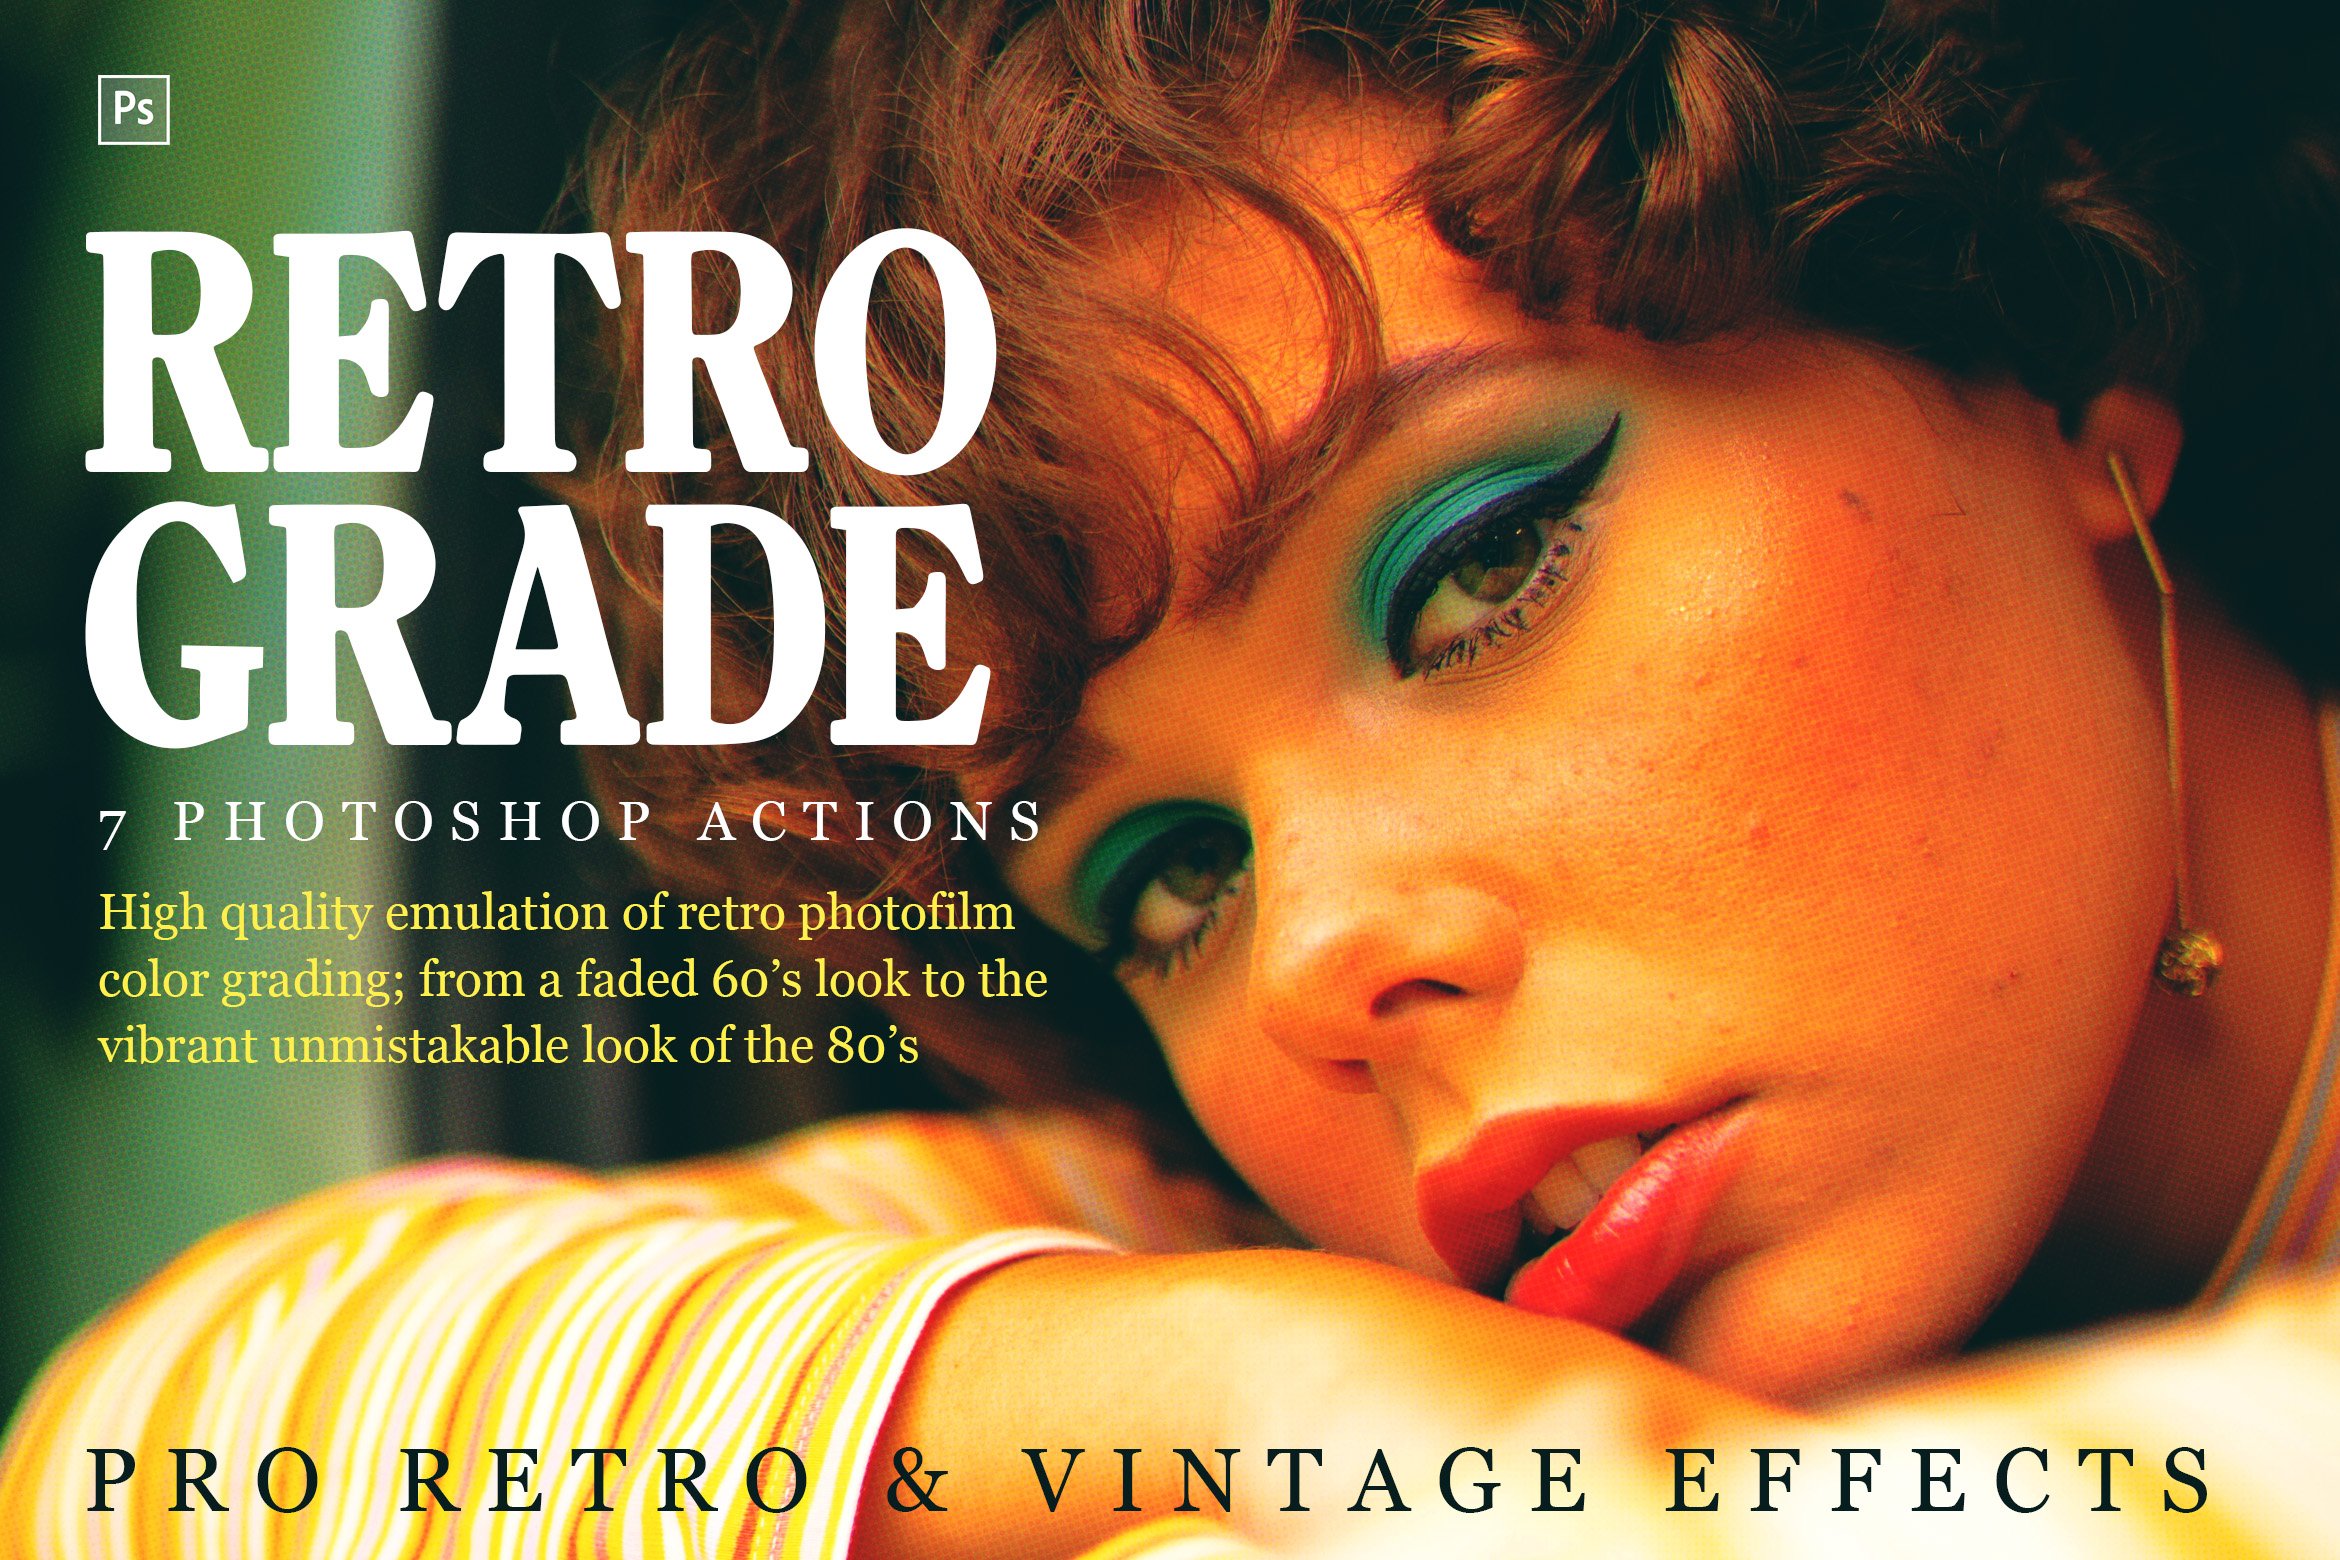 Retrograde Retro and Vintage Effectscover image.